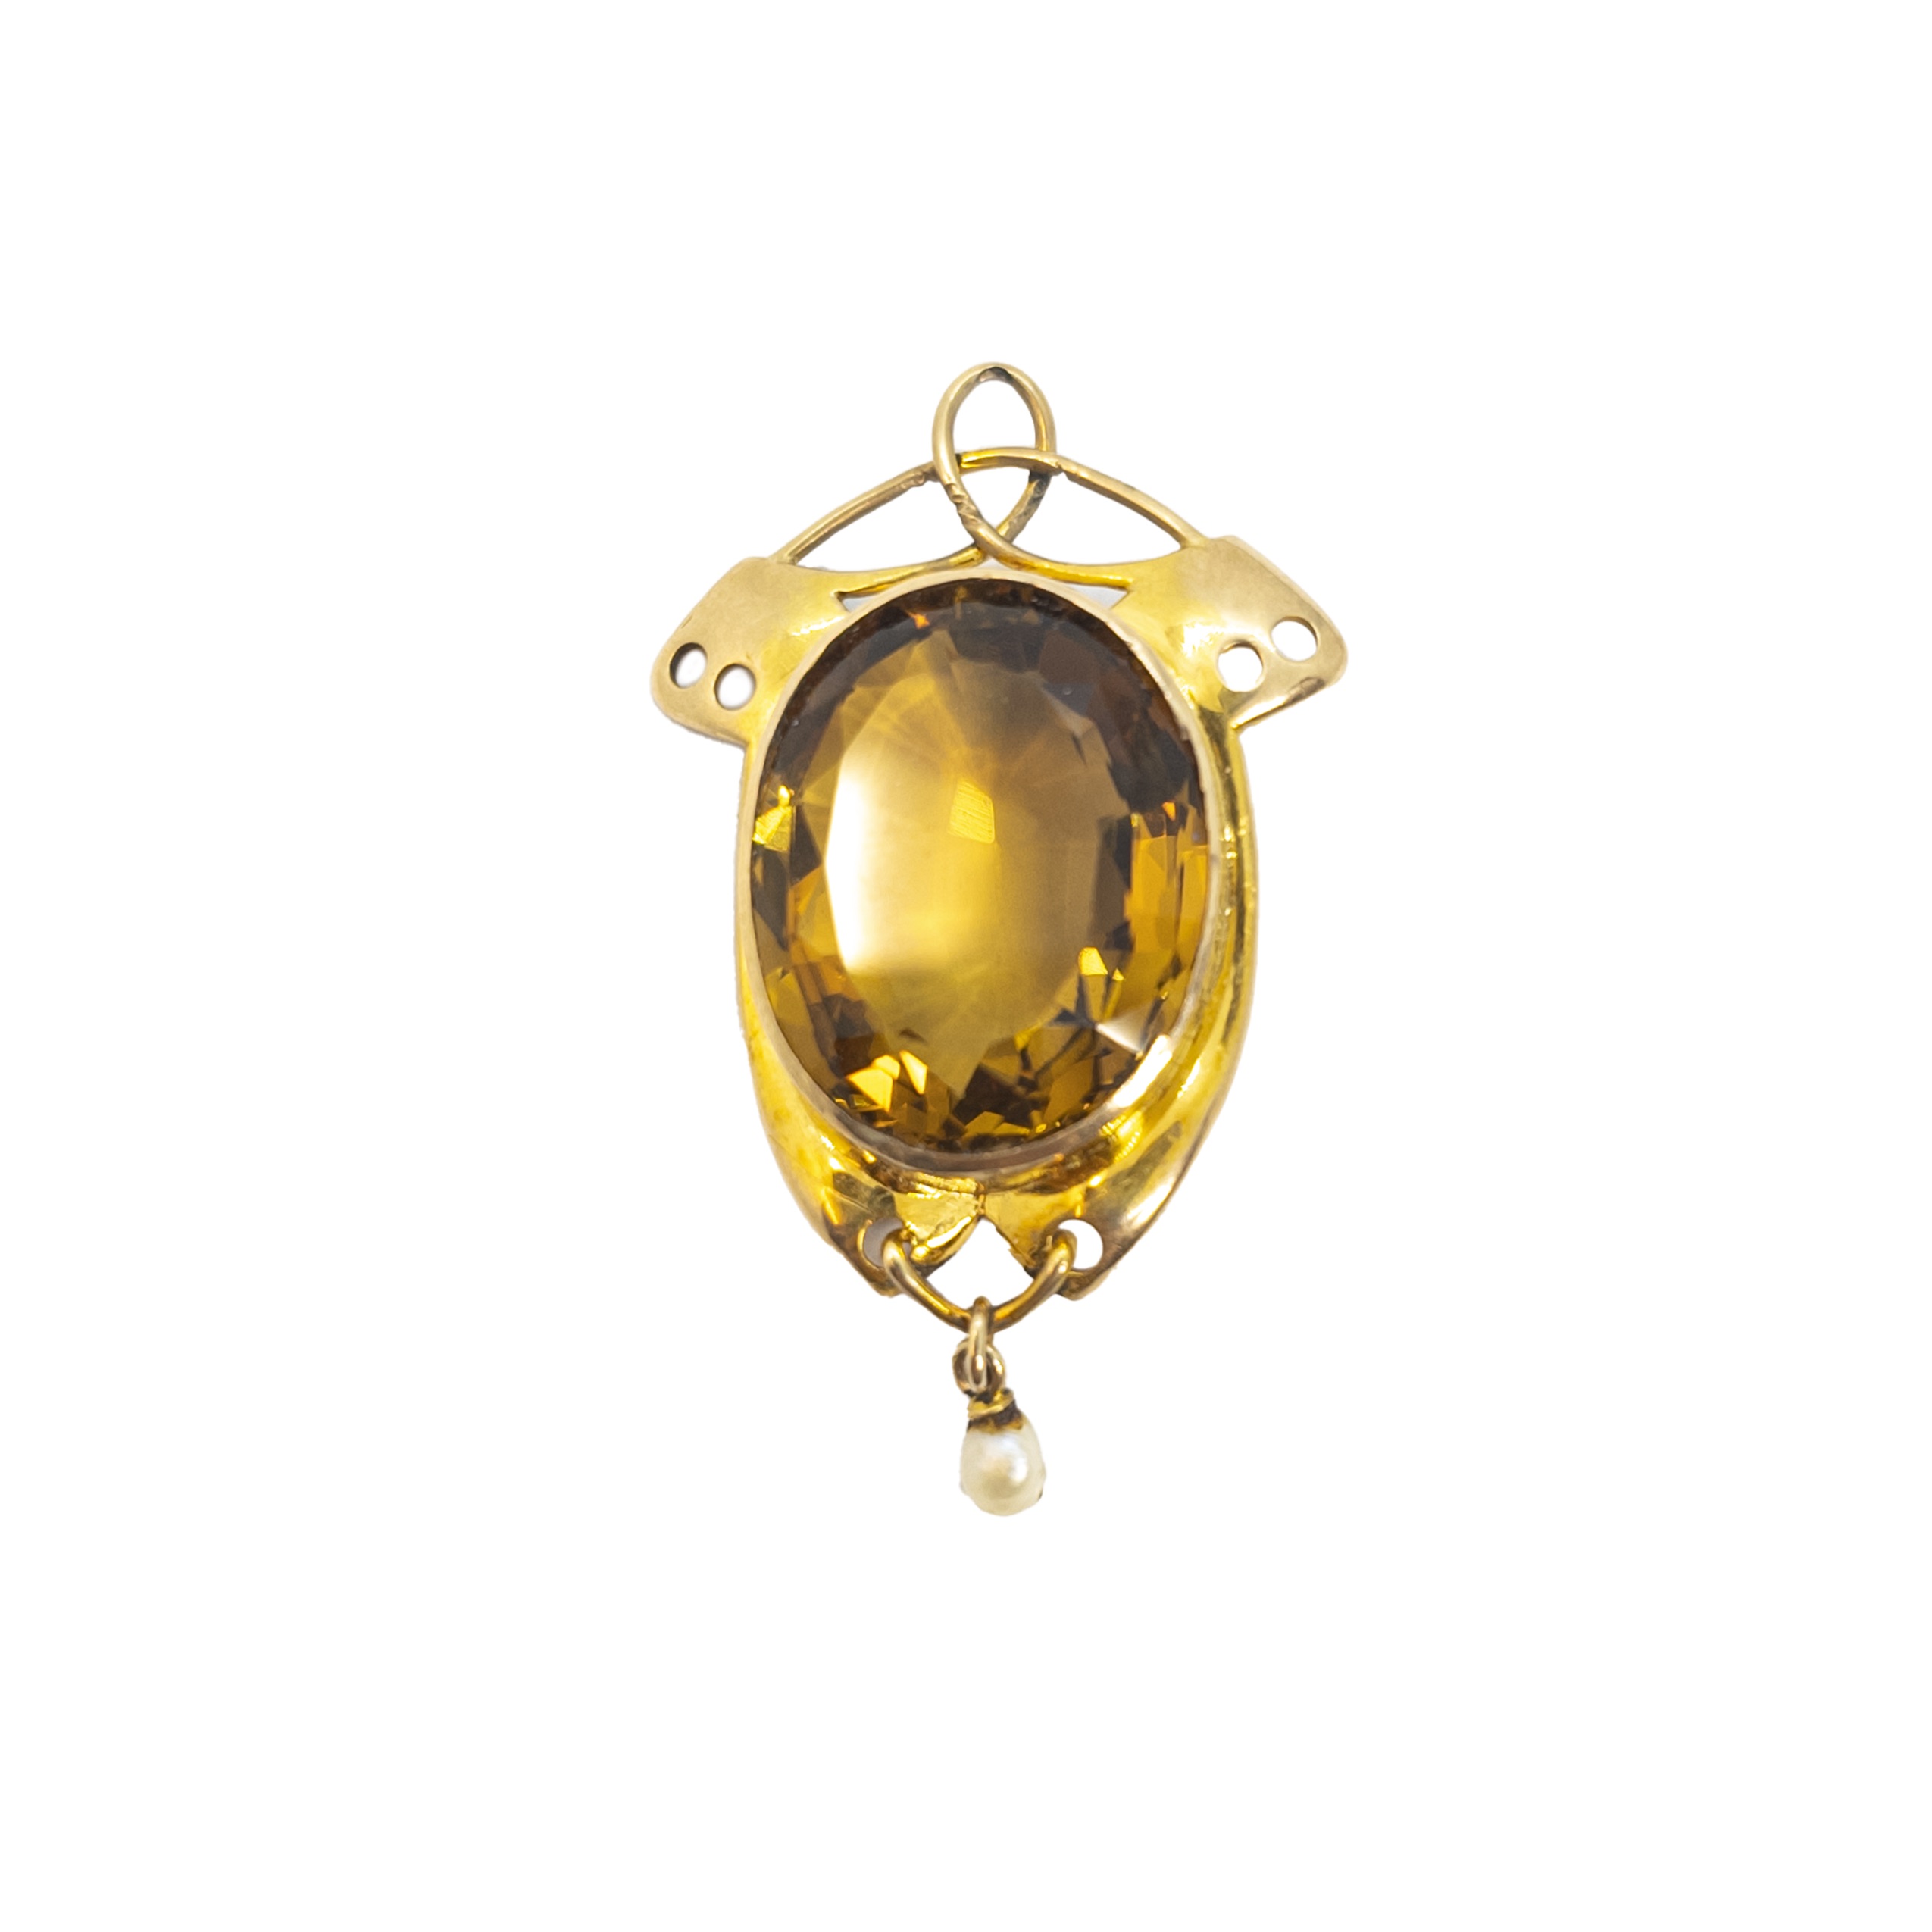 British, Art Nouveau, A citrine and yellow gold pendant